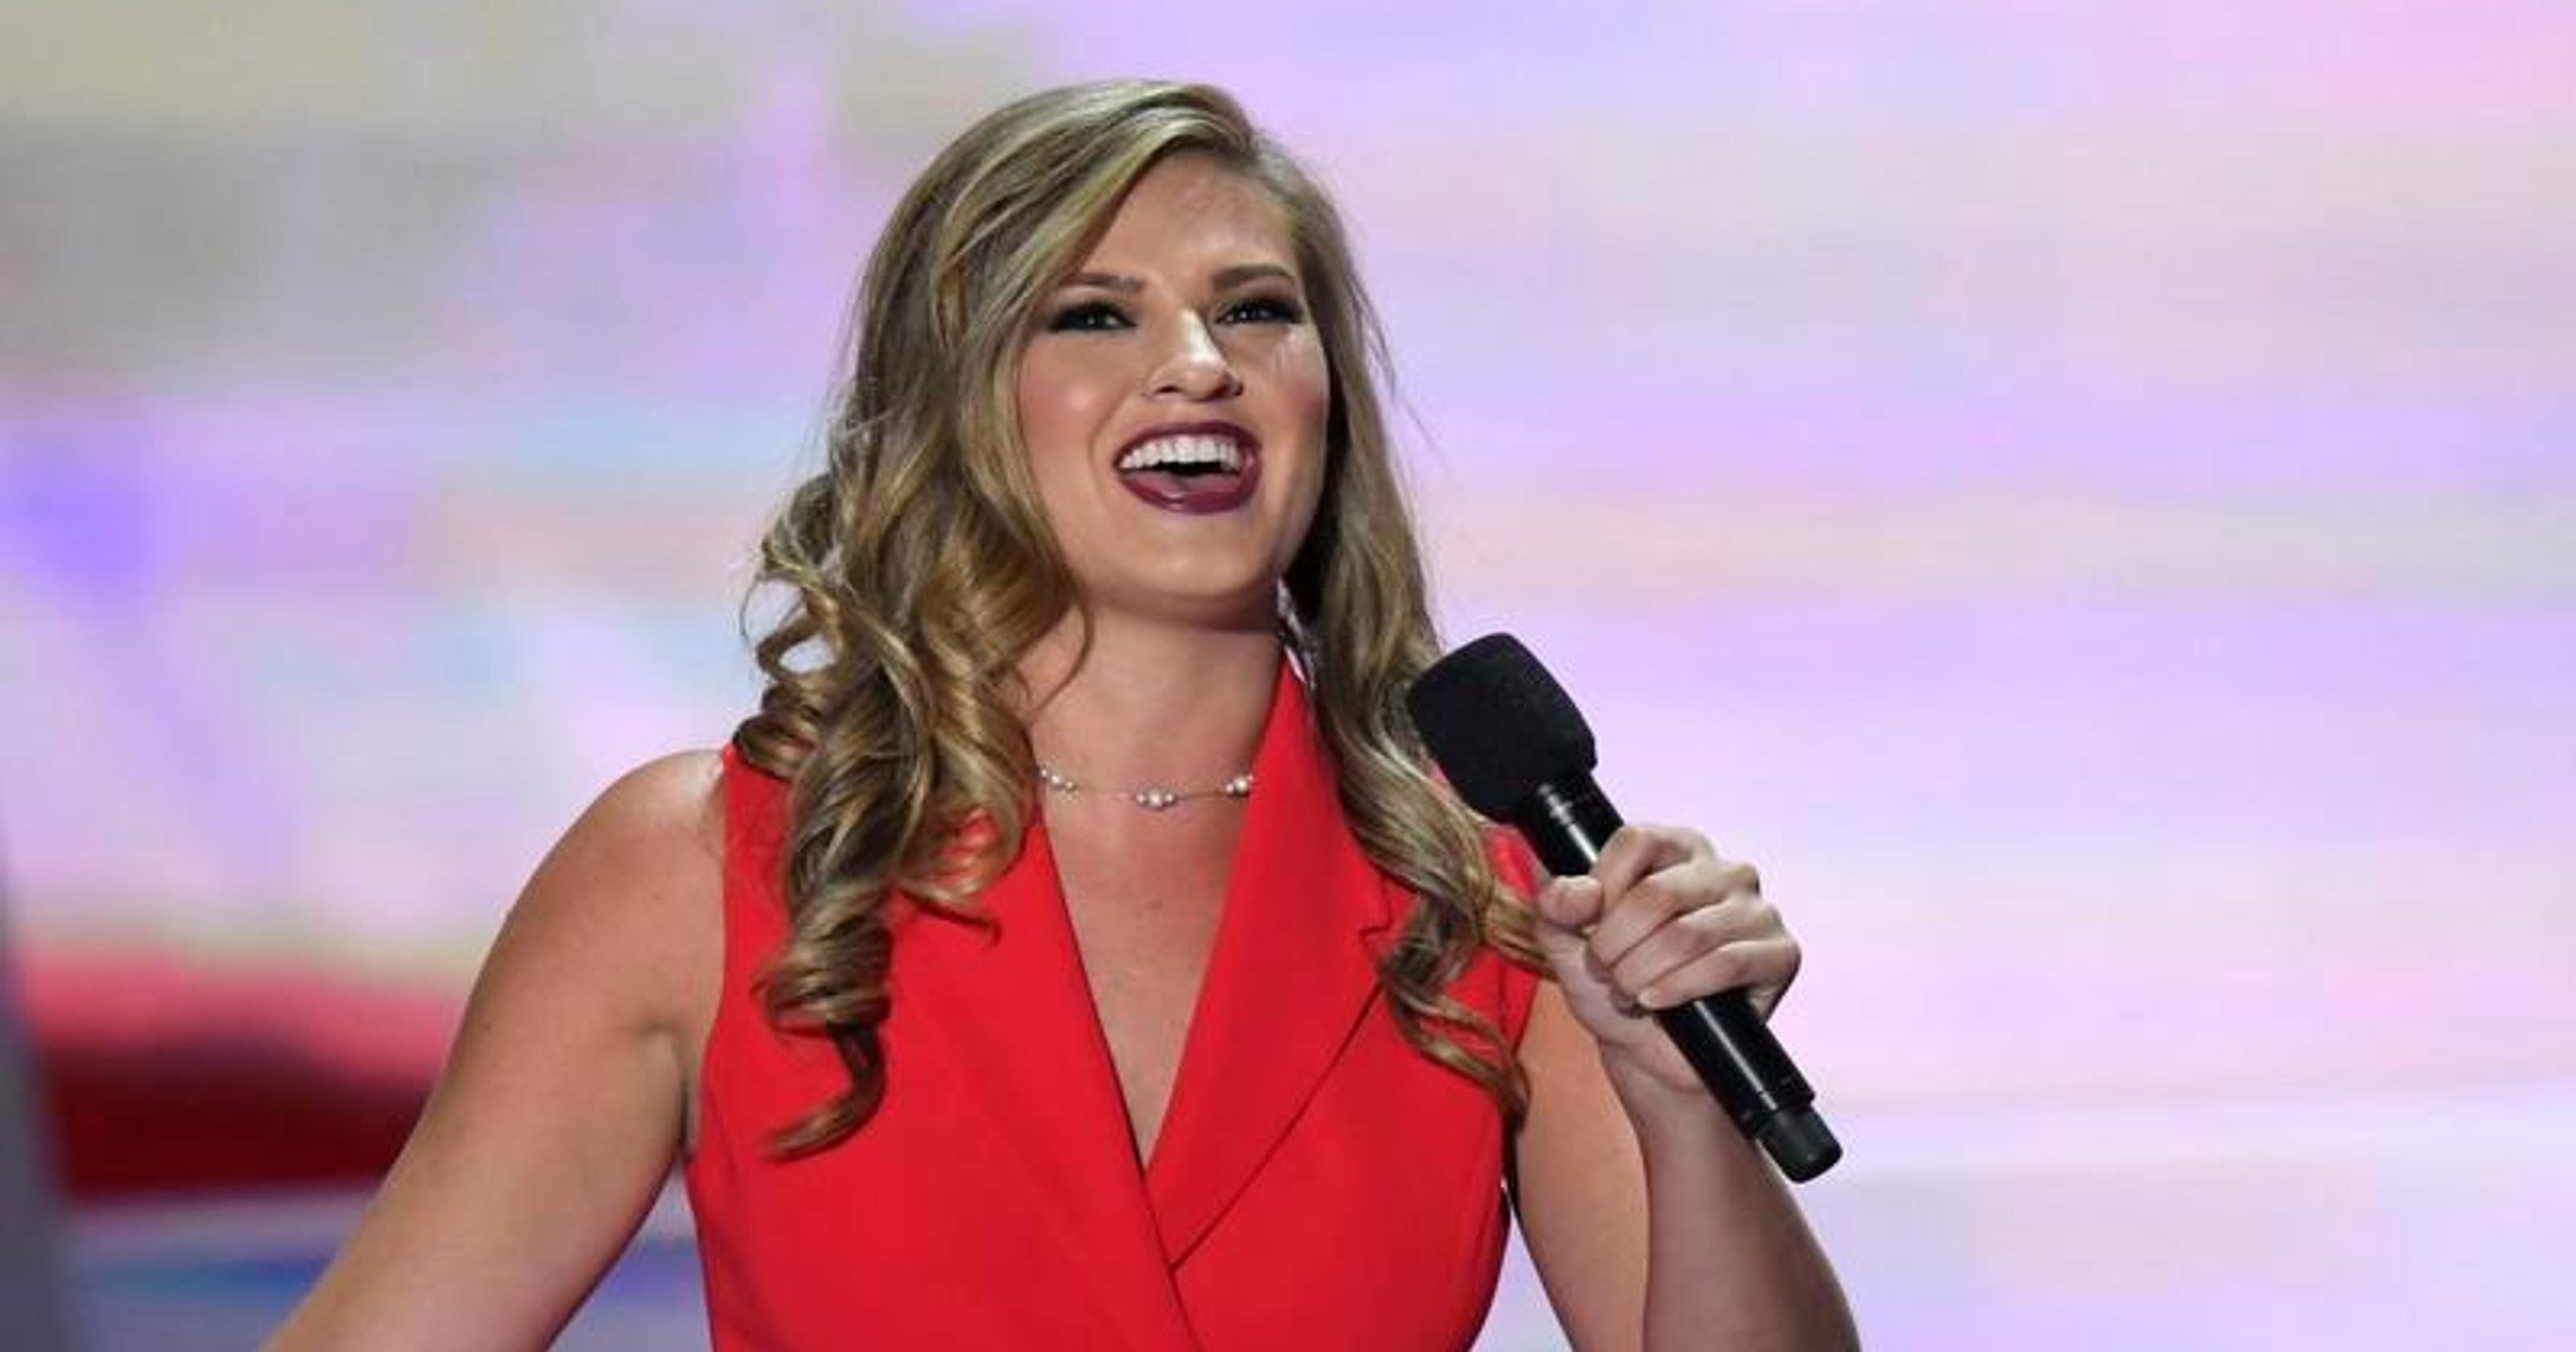 Meet Ayla Brown Nashville singer who sang national anthem at GOP